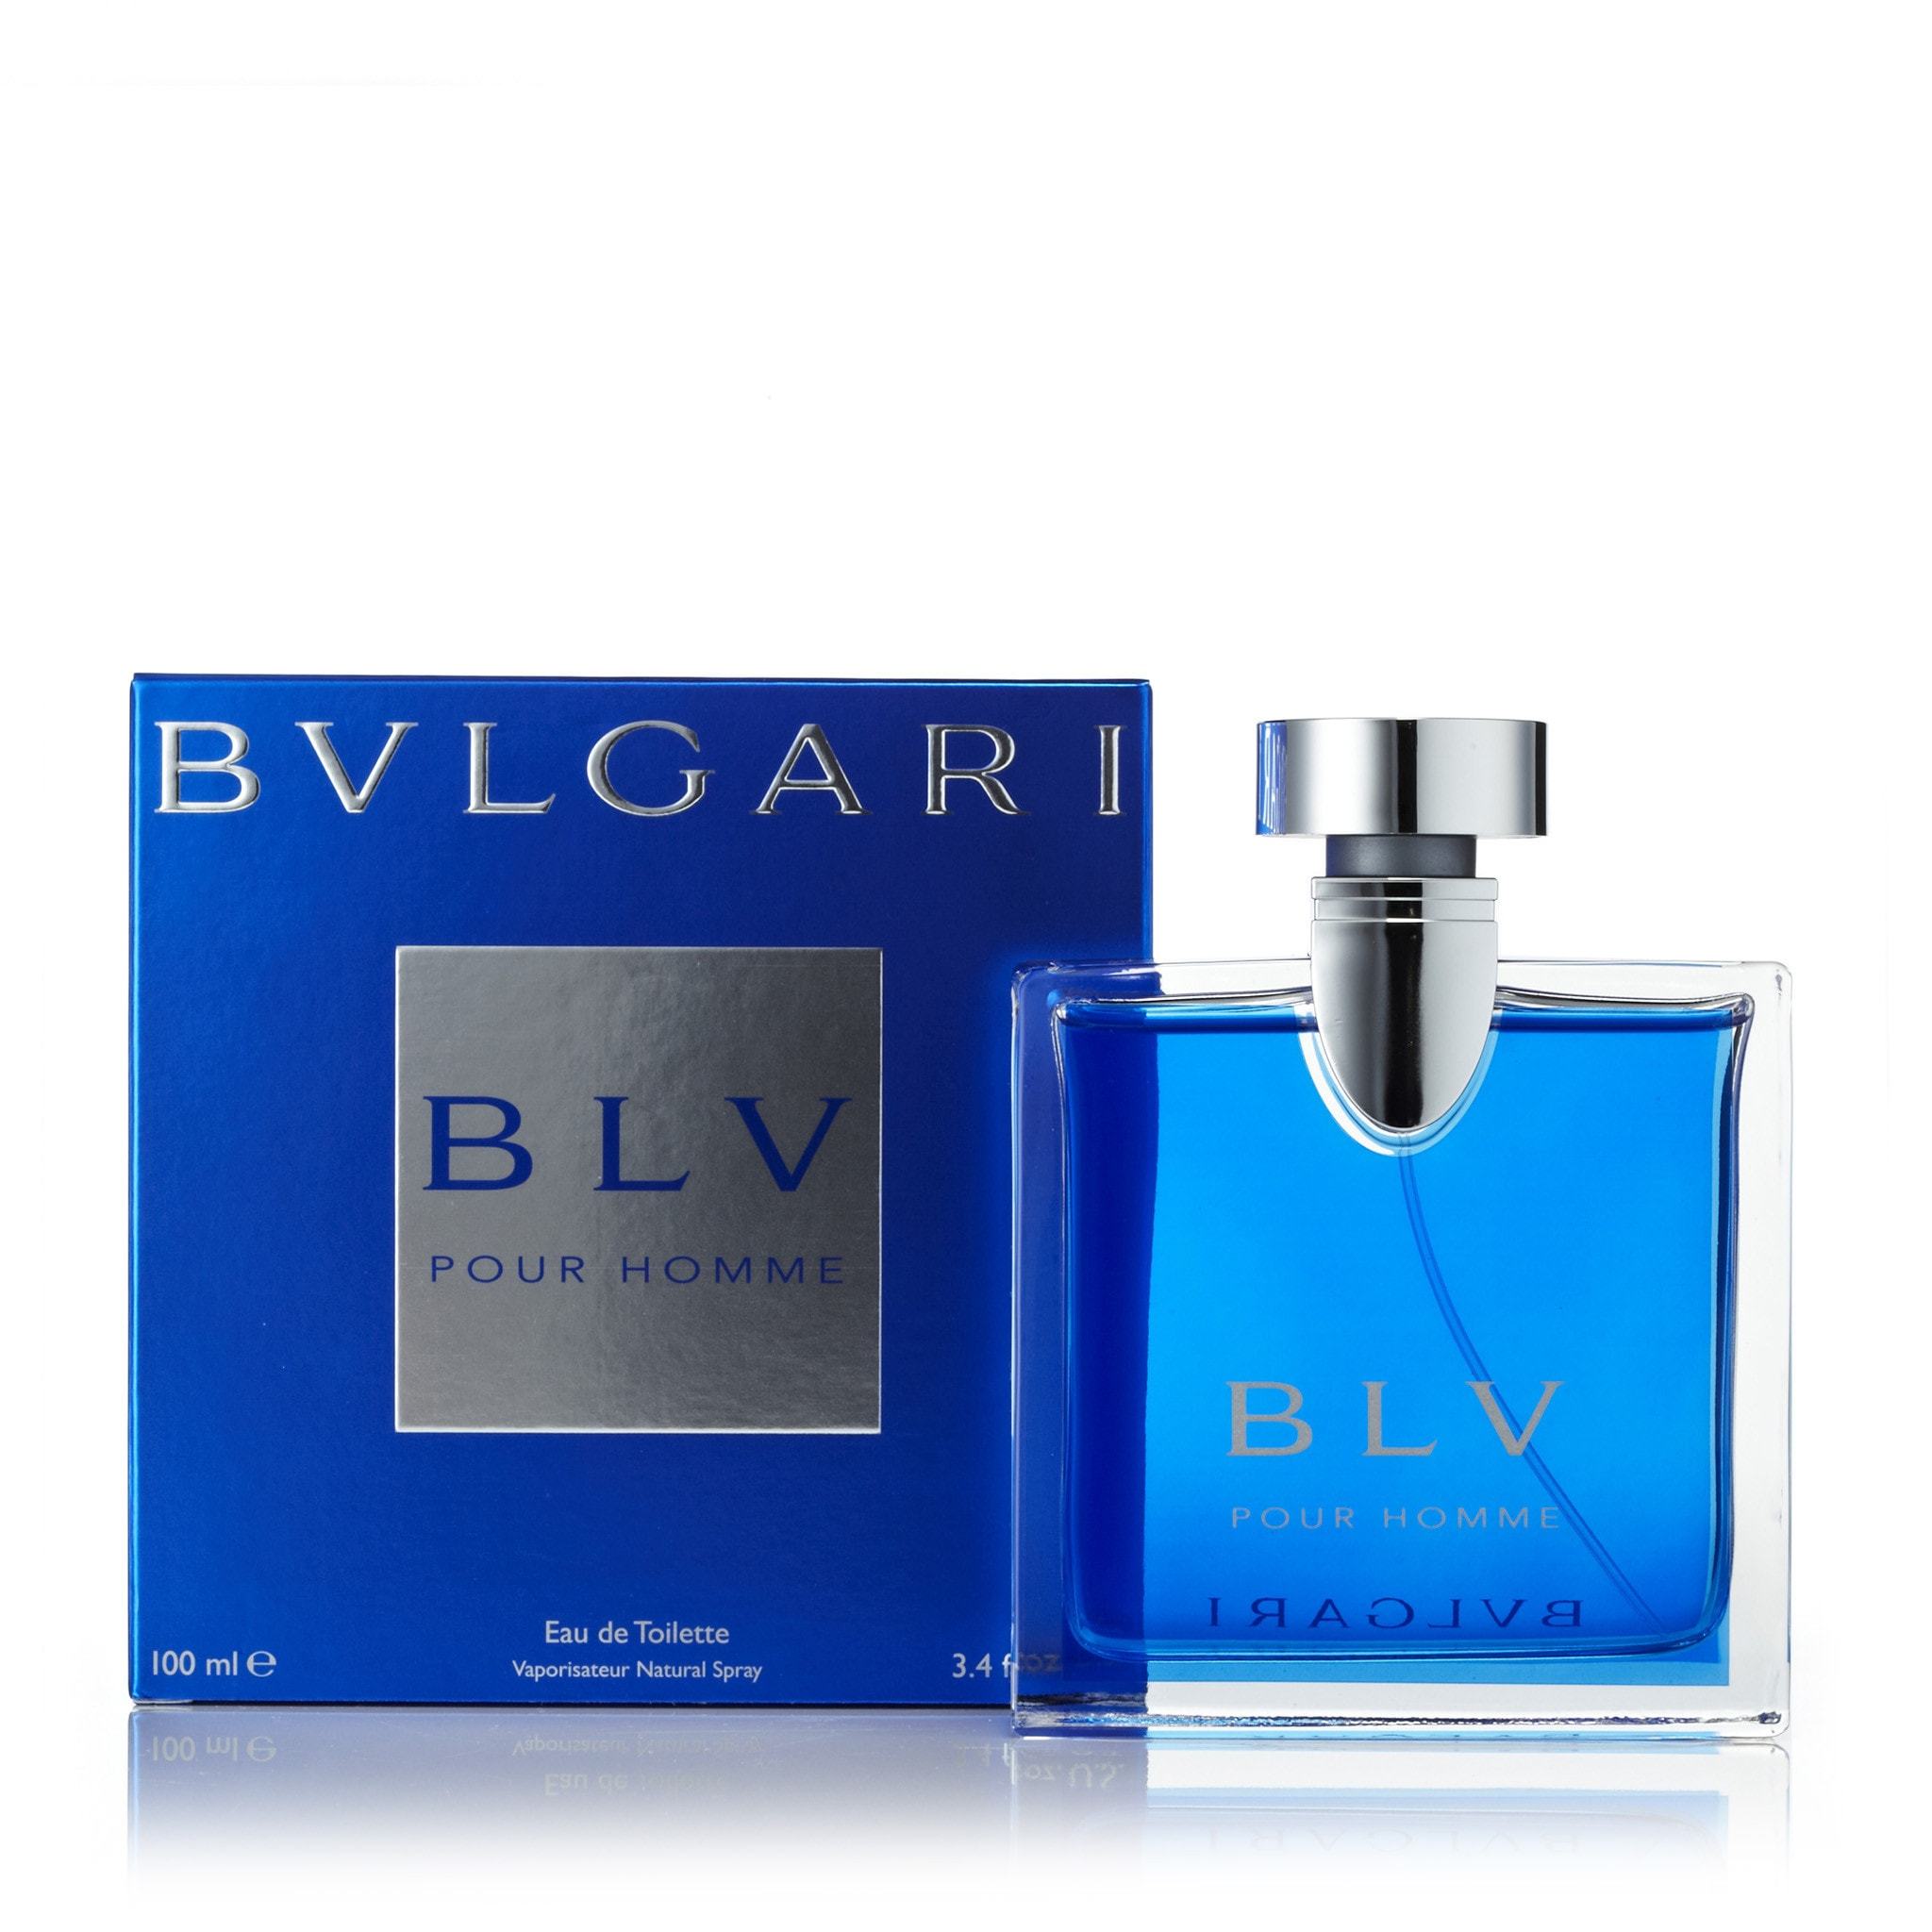 Buy Bvlgari BLV EDT - 100 ml Online In India